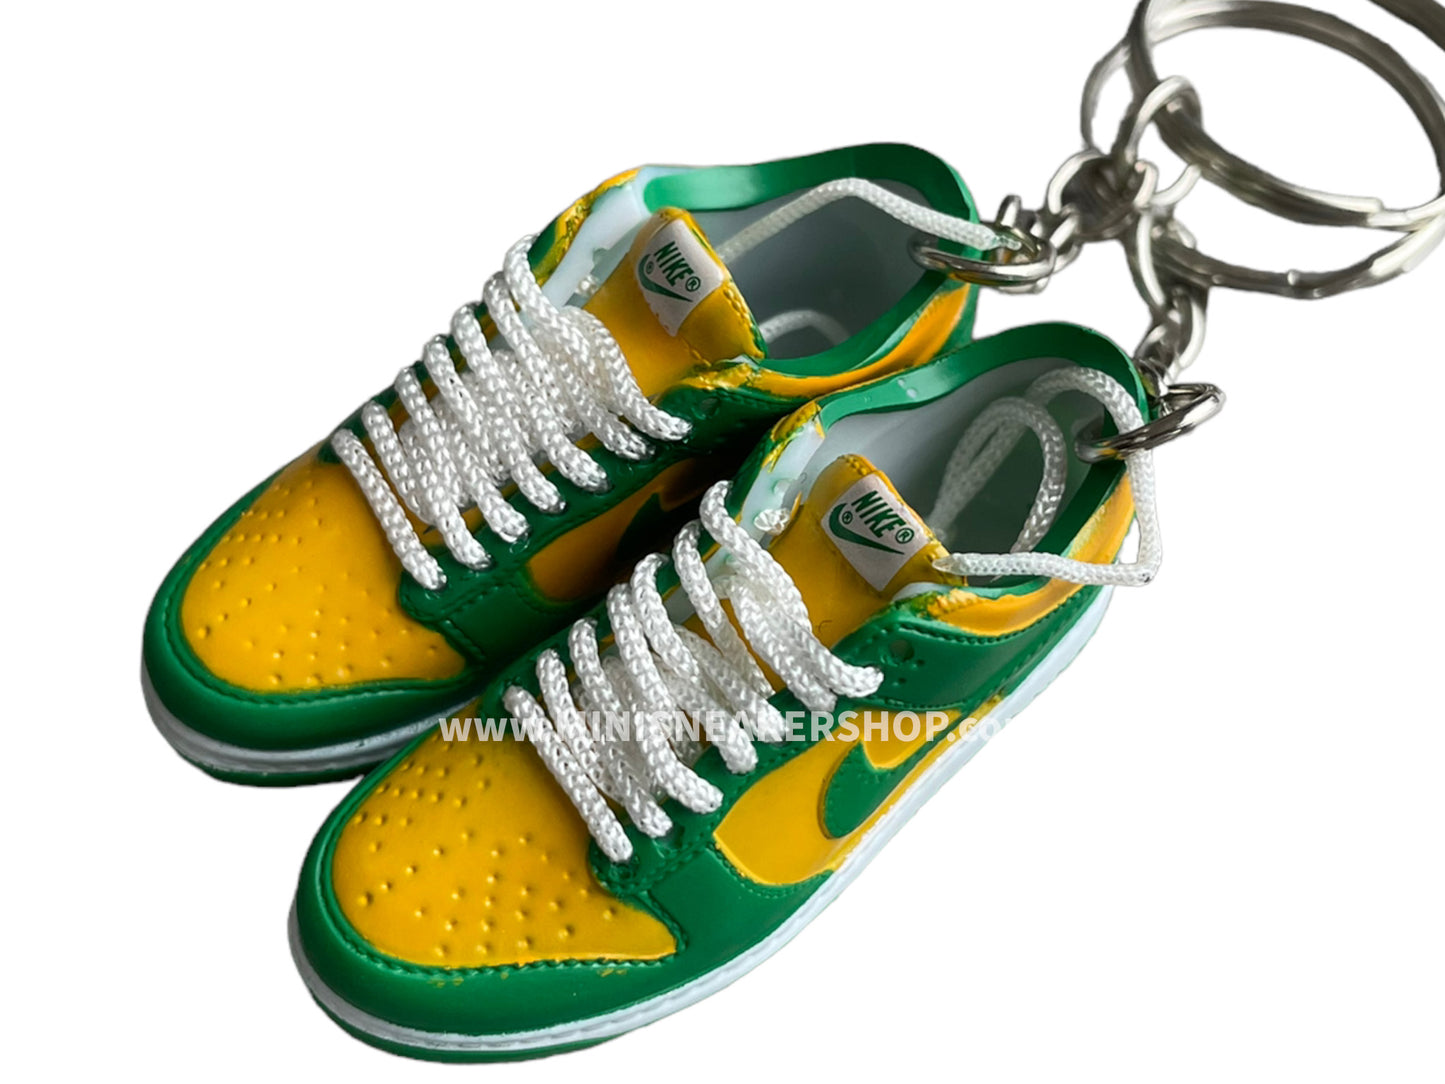 Mini sneaker keychain 3D Dunk - Green Yellow